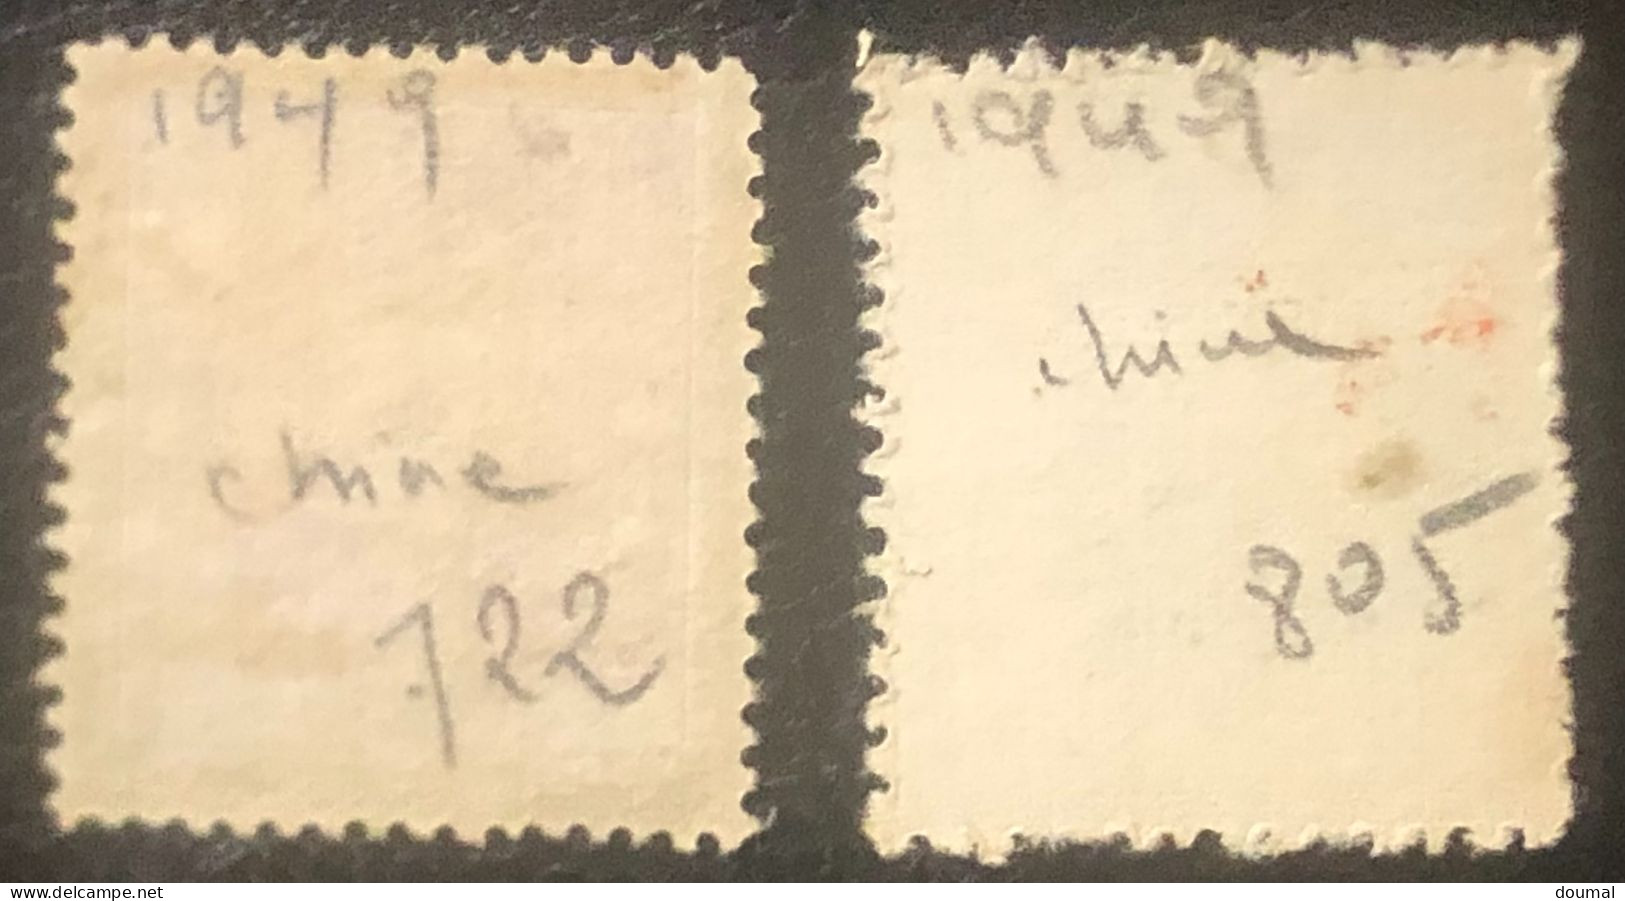 1949 China Stamp10.00 Et 800.00 Sun-Yat-Sen Mint No Gum MNG - Nuevos